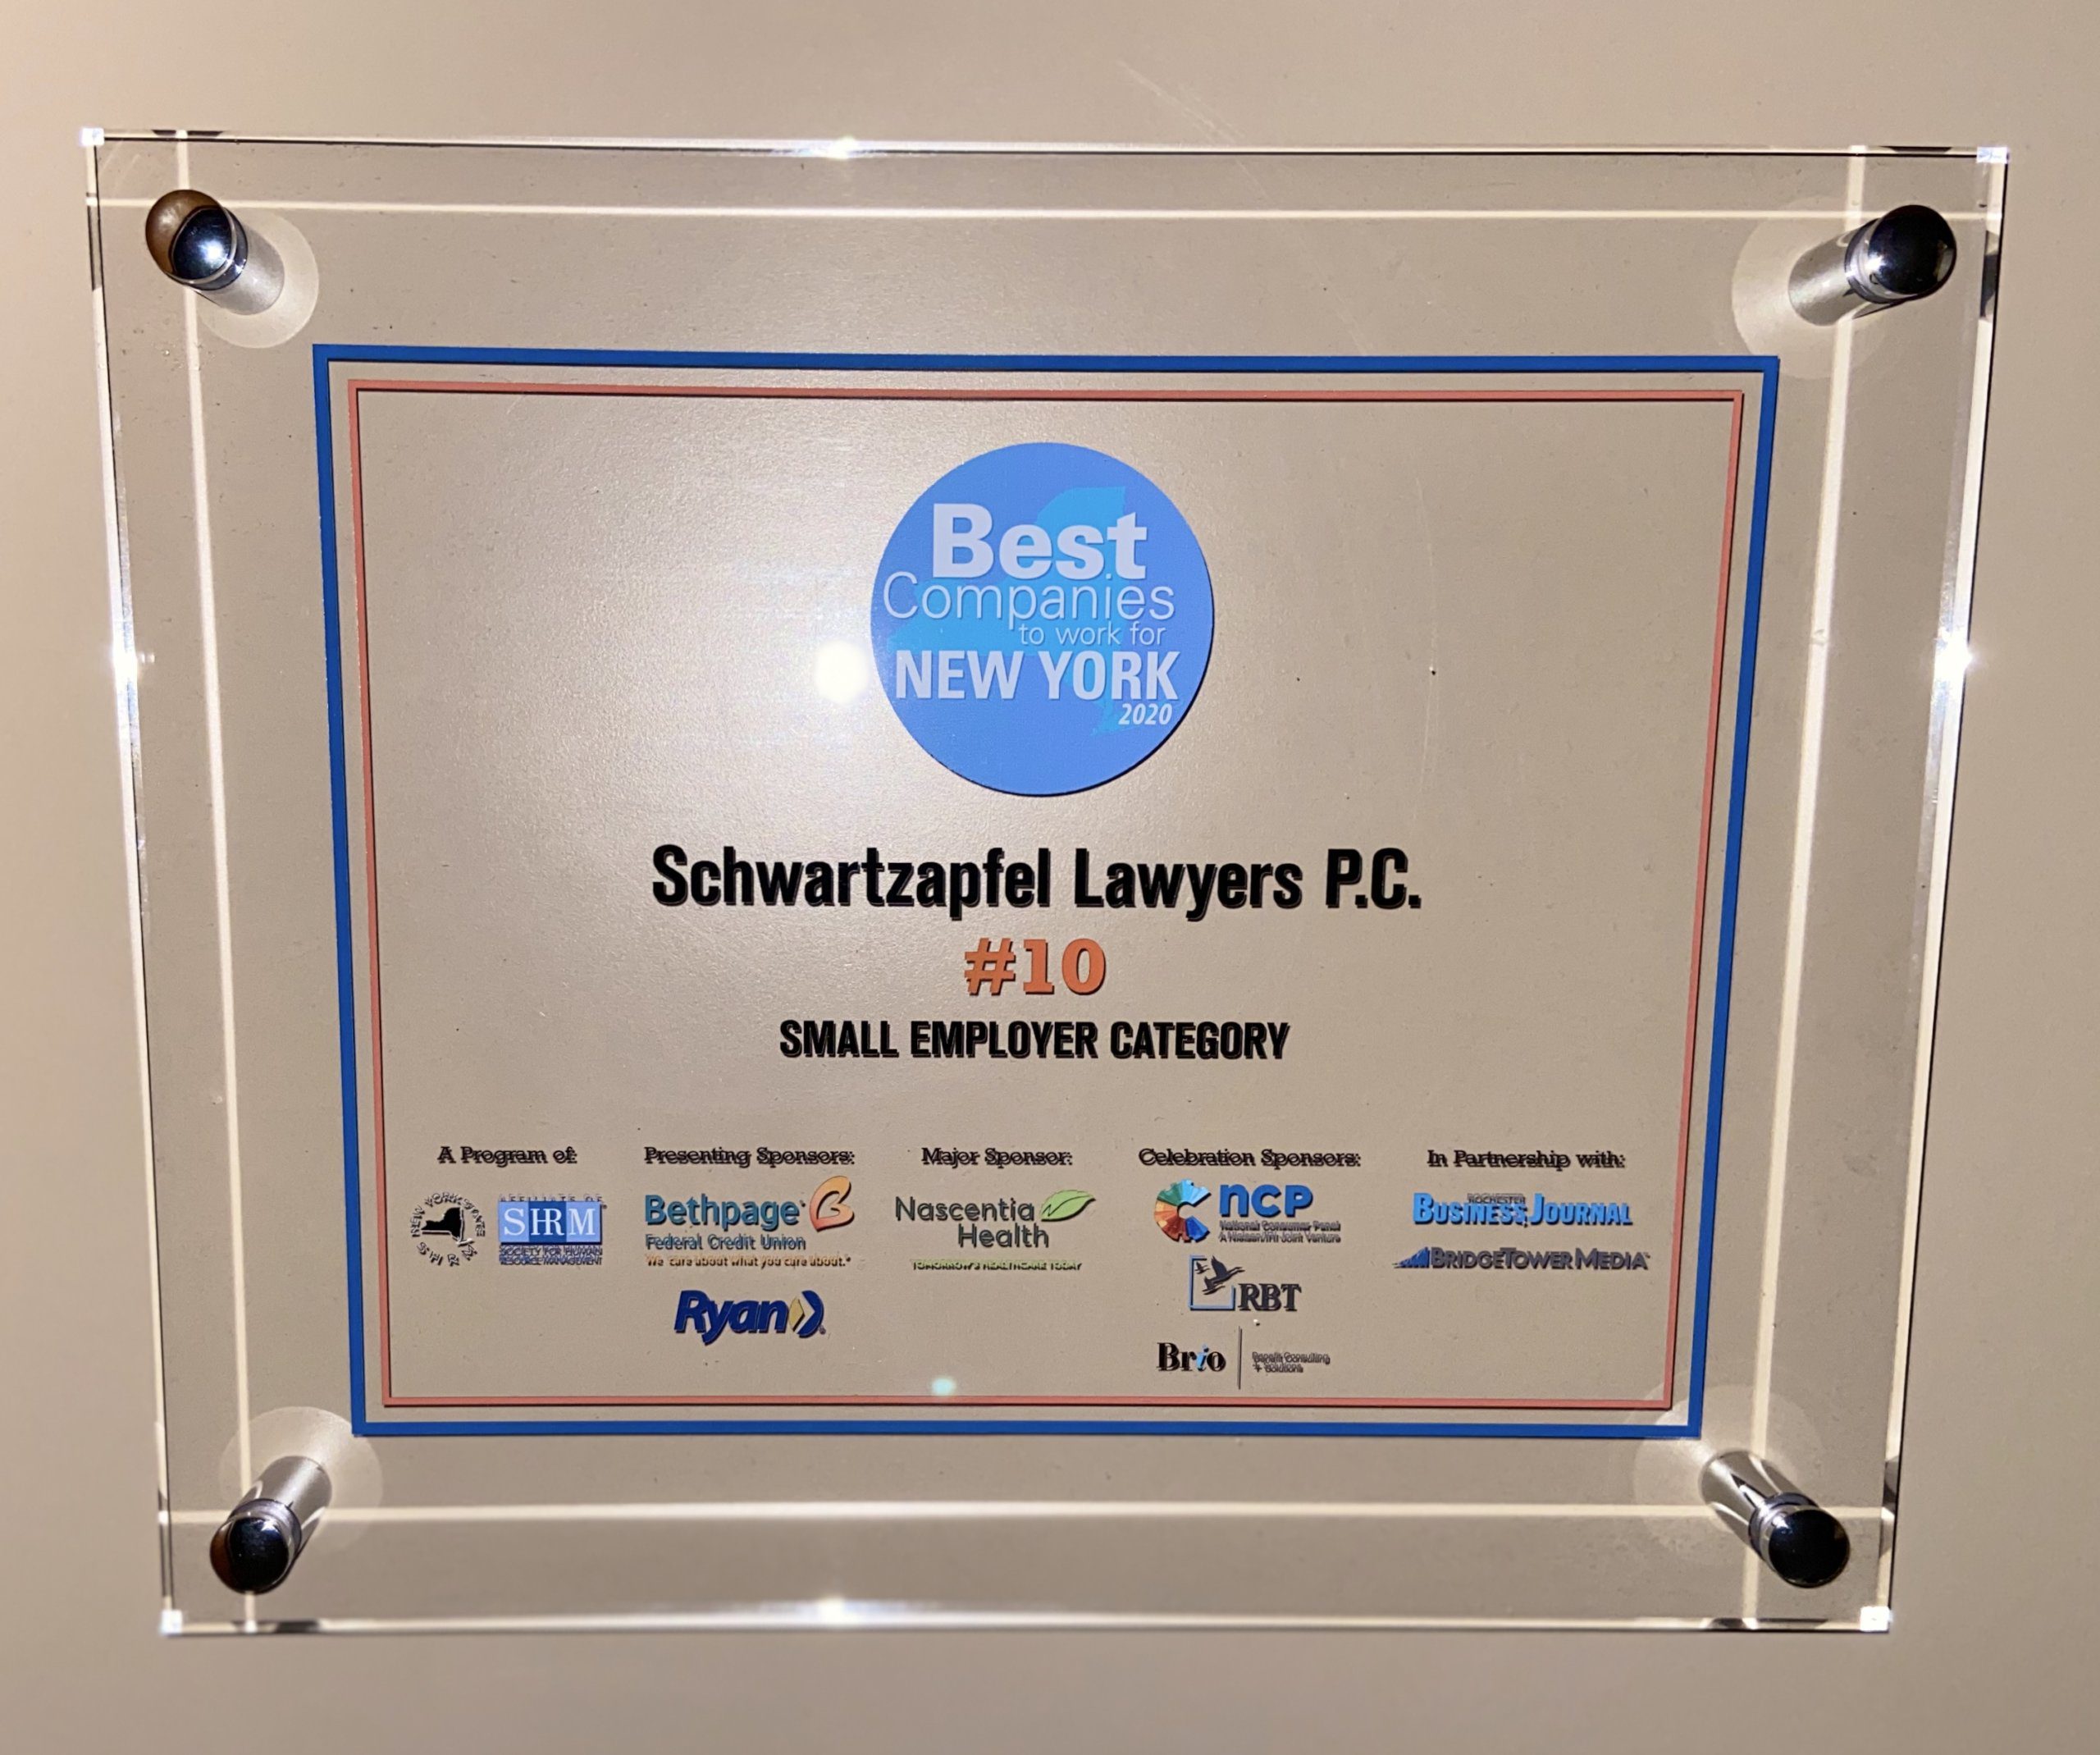 Schwartzapfel® Lawyers Best Companies to Work For New York 2020